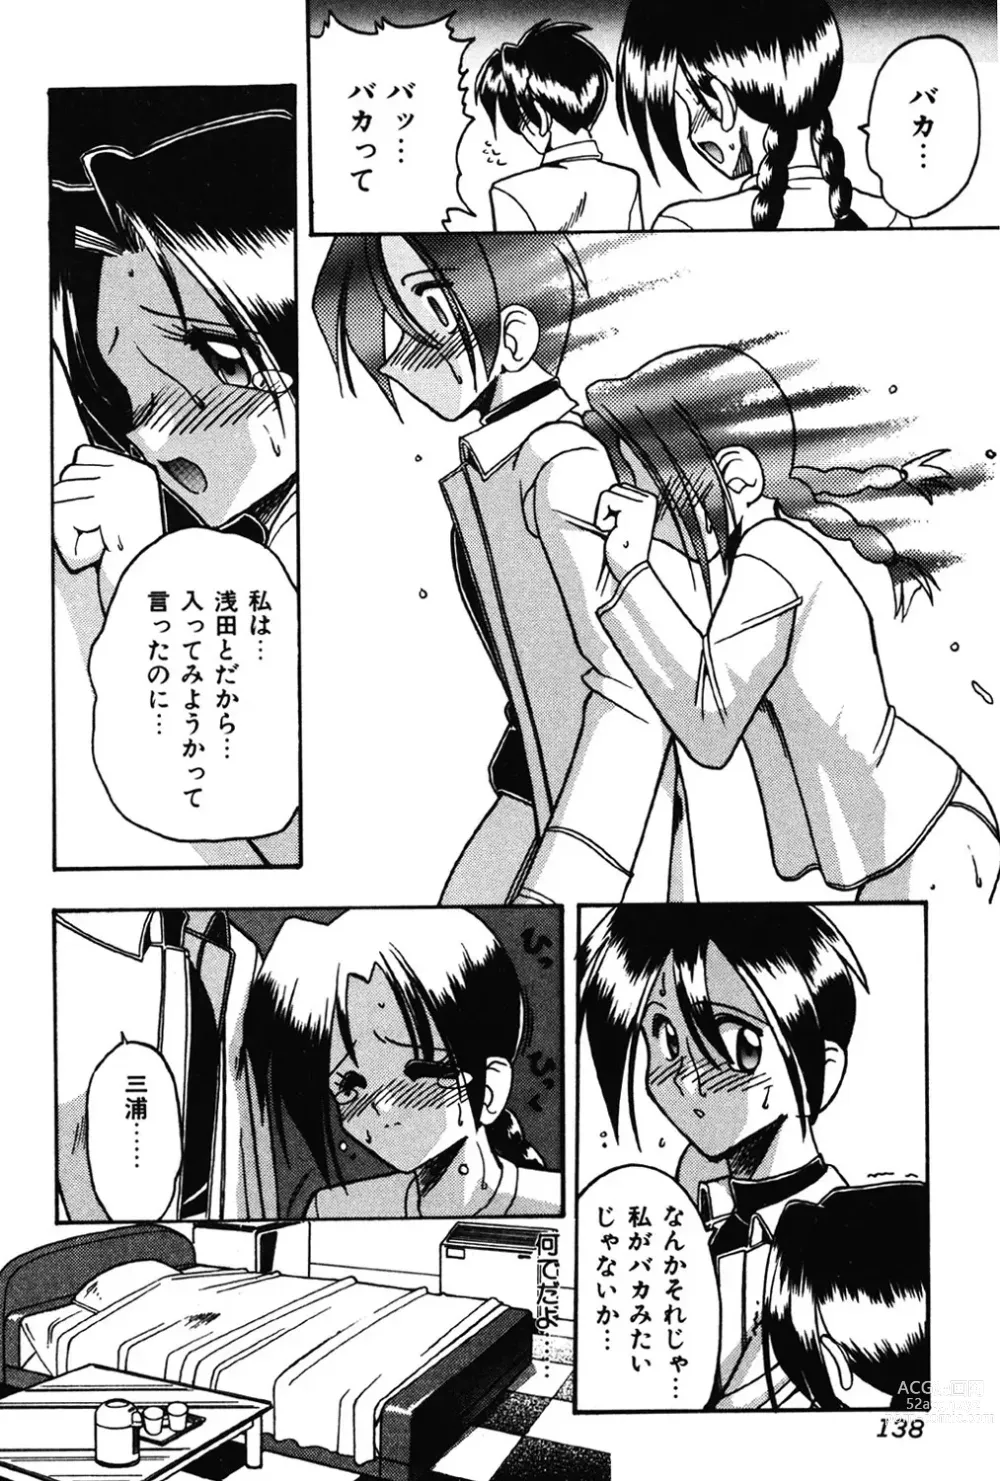 Page 137 of manga Hahaoya Ga Onna Ni Naru Toki